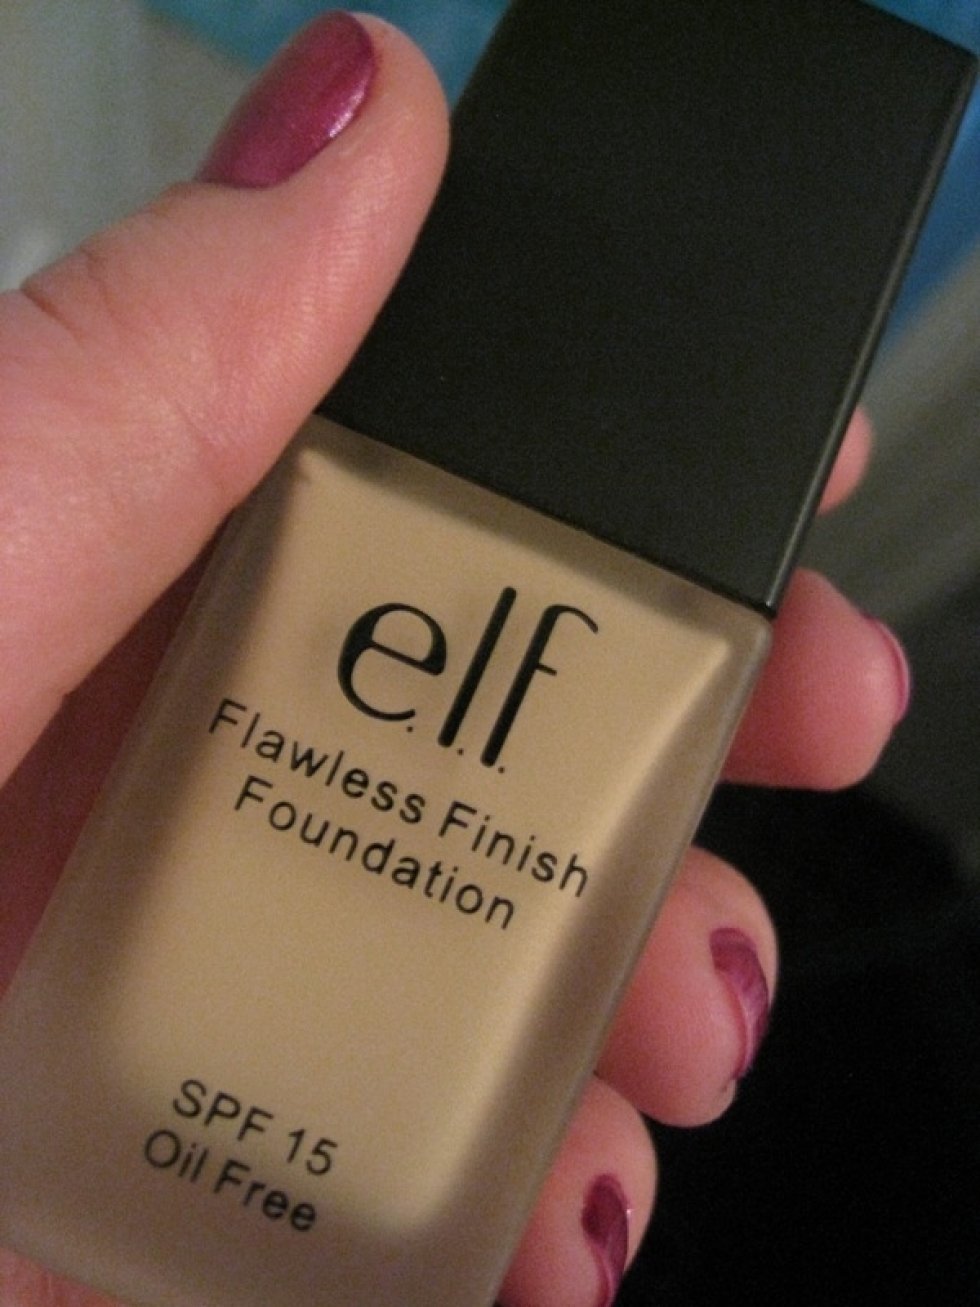 e.l.f. Flawless Finish Foundation